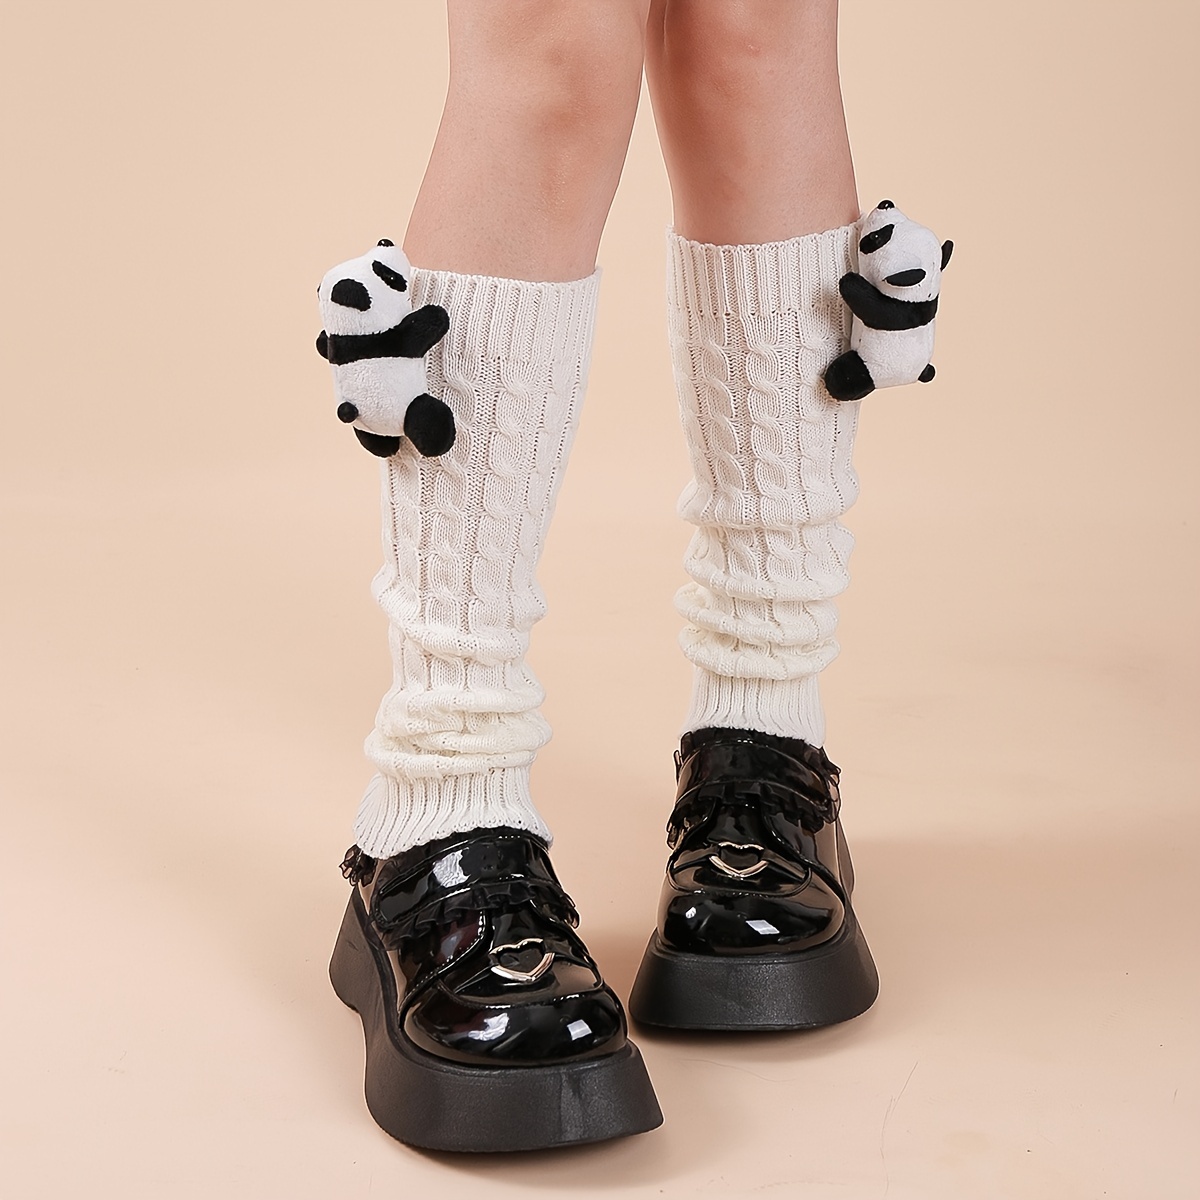 Classic Knit Leg Warmers, Rib-Knit Knee-High Leg Warmer Socks, Women's  Stockings & Hosiery